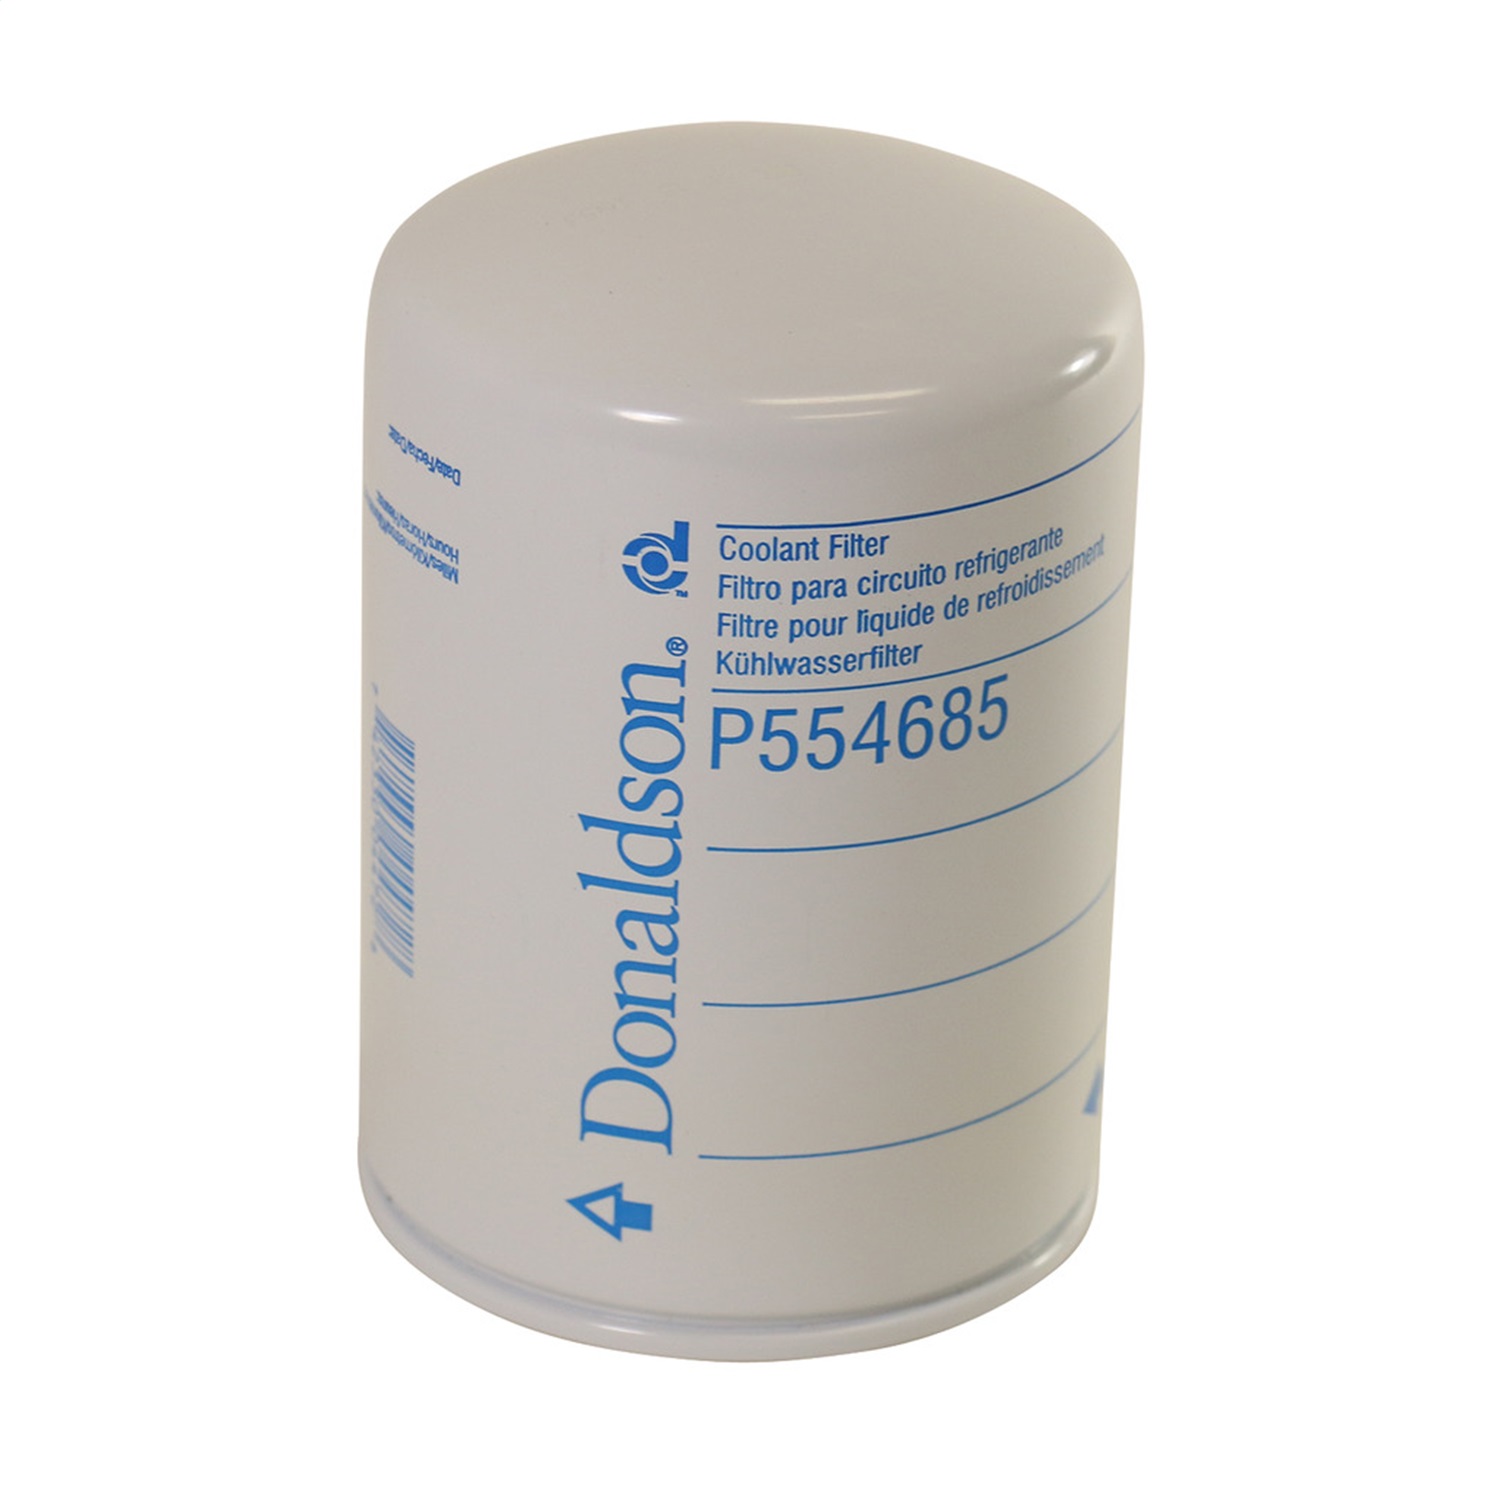 BD P554685 Coolant Filter Cartridge 